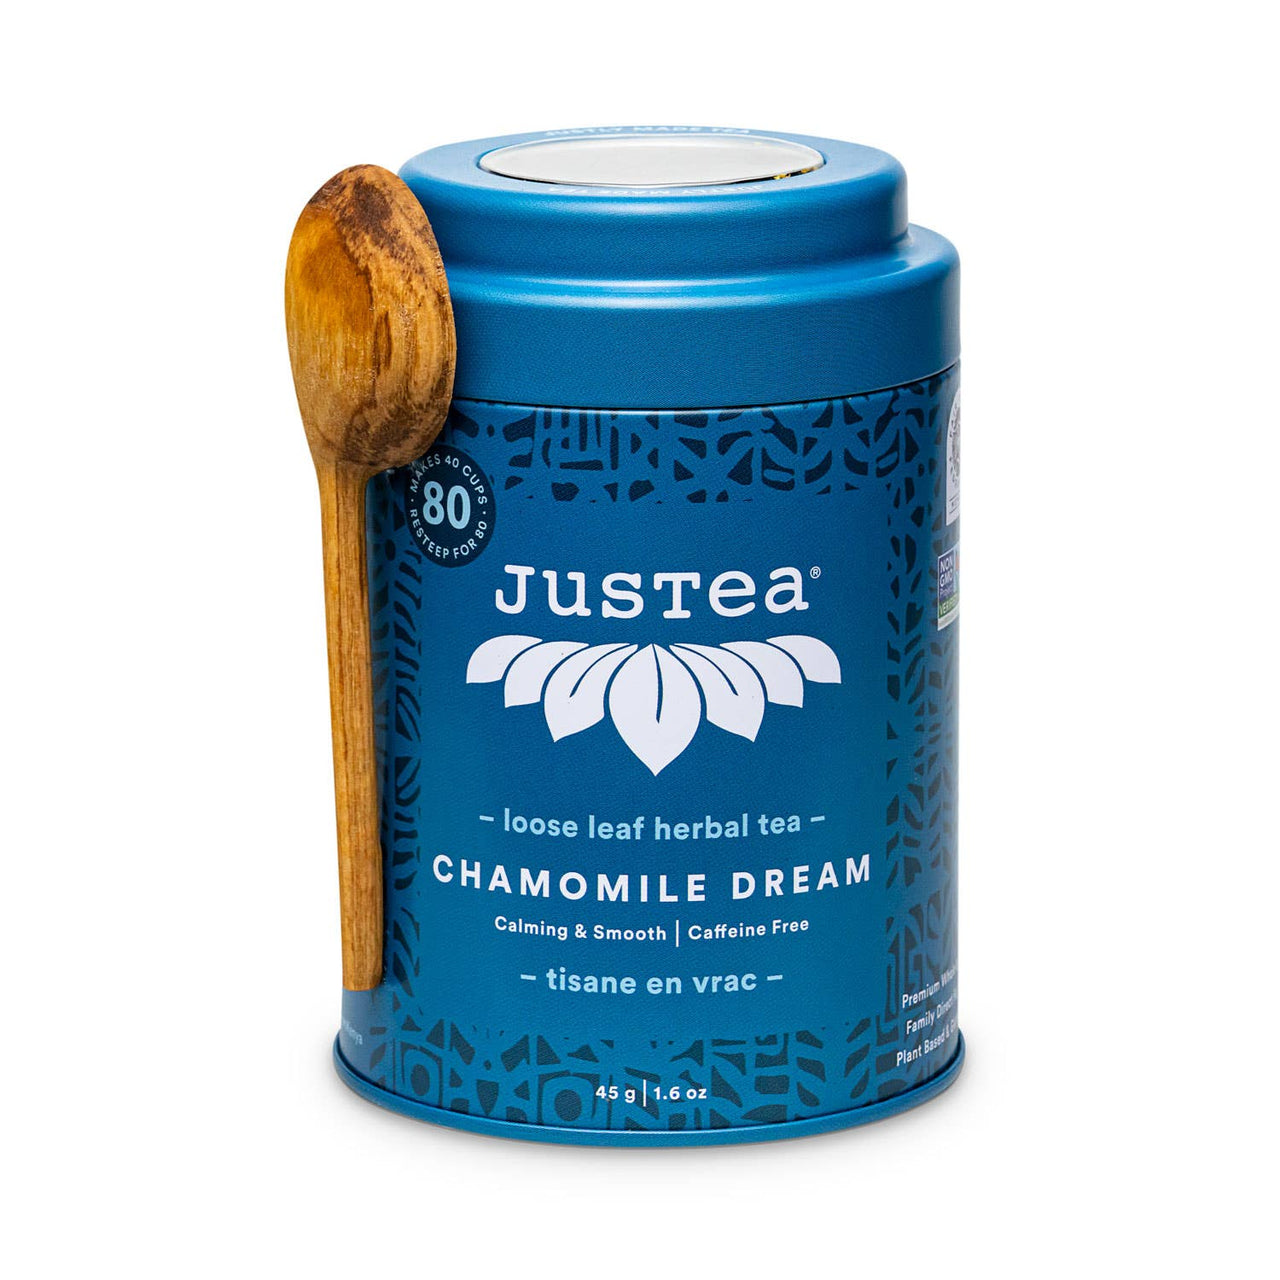 Chamomile Dream Tin & Spoon - Organic, Fair-Trade Herbal Tea  JusTea   